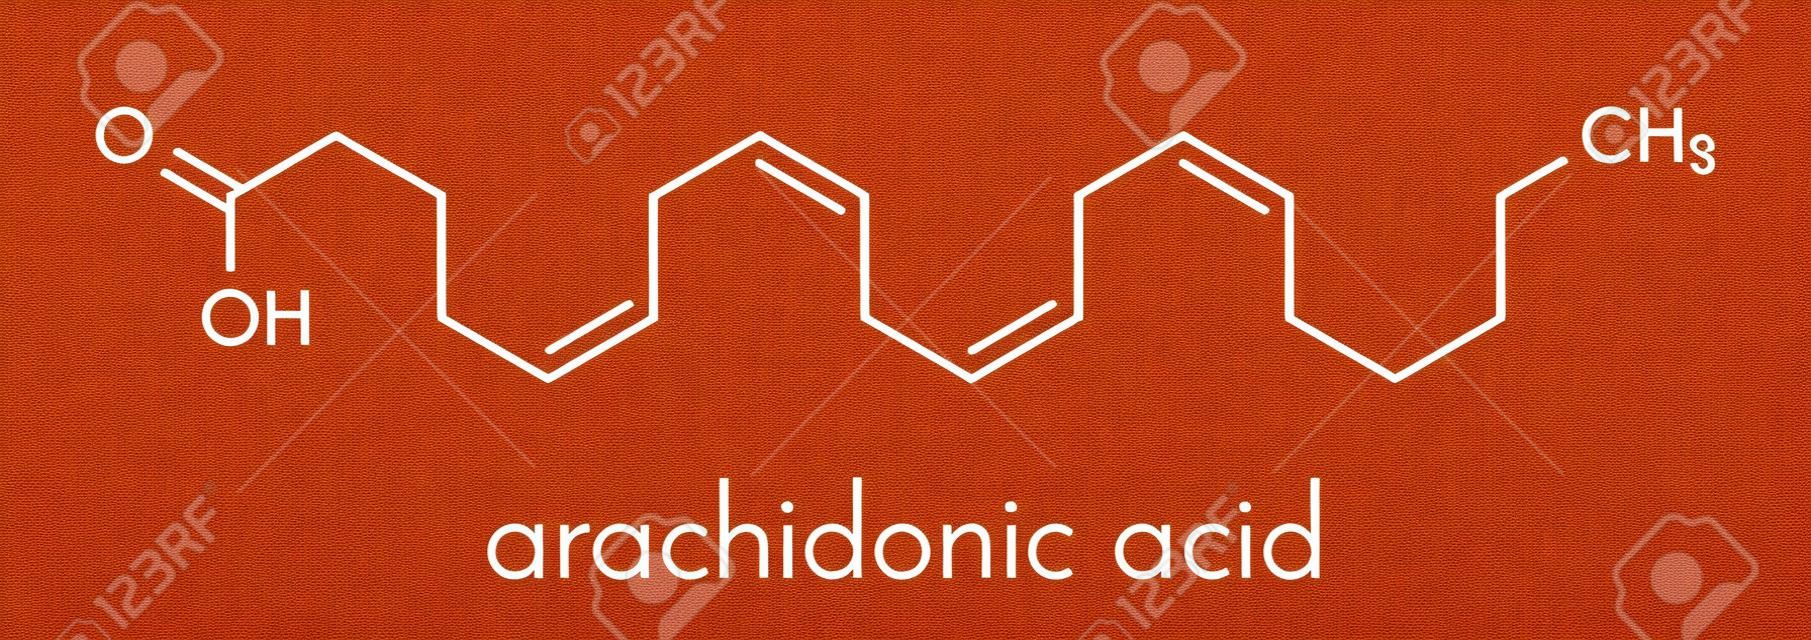 Arachidonic acid molecule. Polyunsaturated omega-6 fatty acid that is a precursor of prostaglandins, prostacyclin, thromboxanes, leukotrienes and anandamide. Skeletal formula.